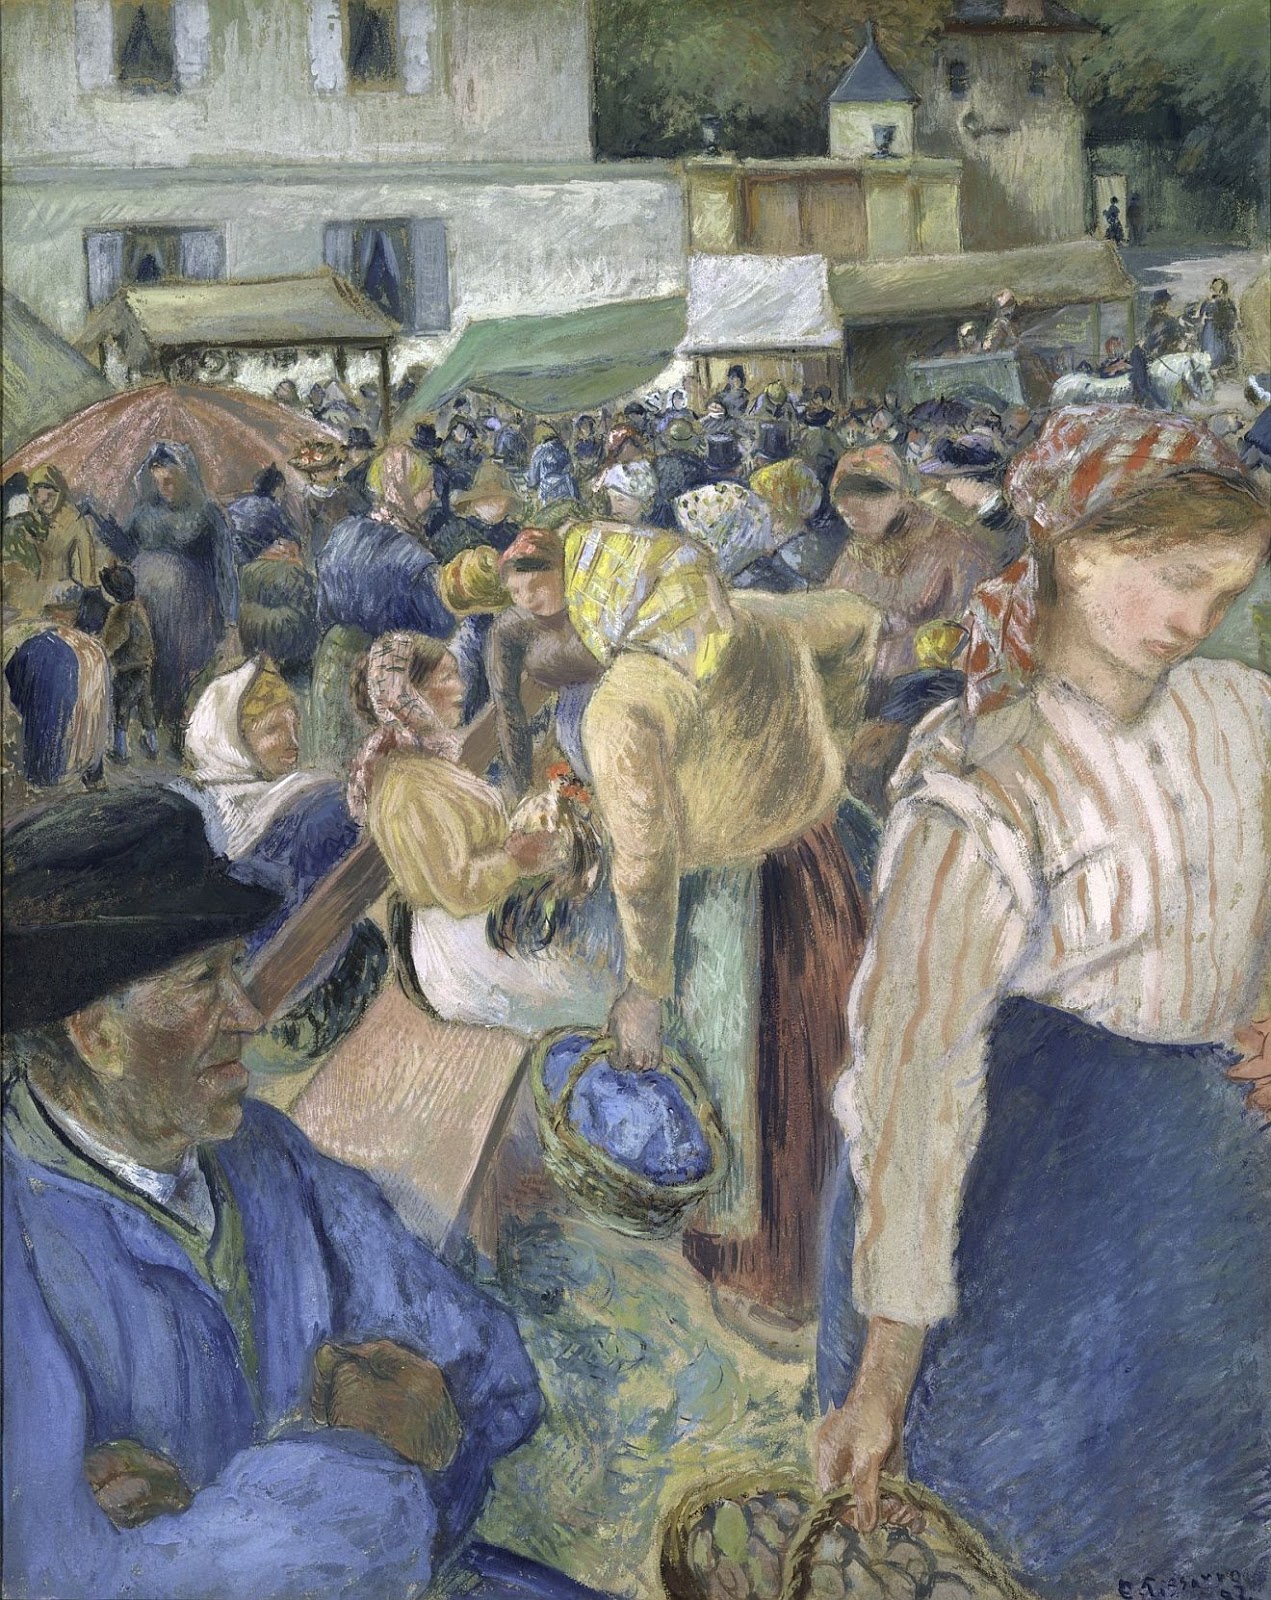 Camille+Pissarro-1830-1903 (311).jpg